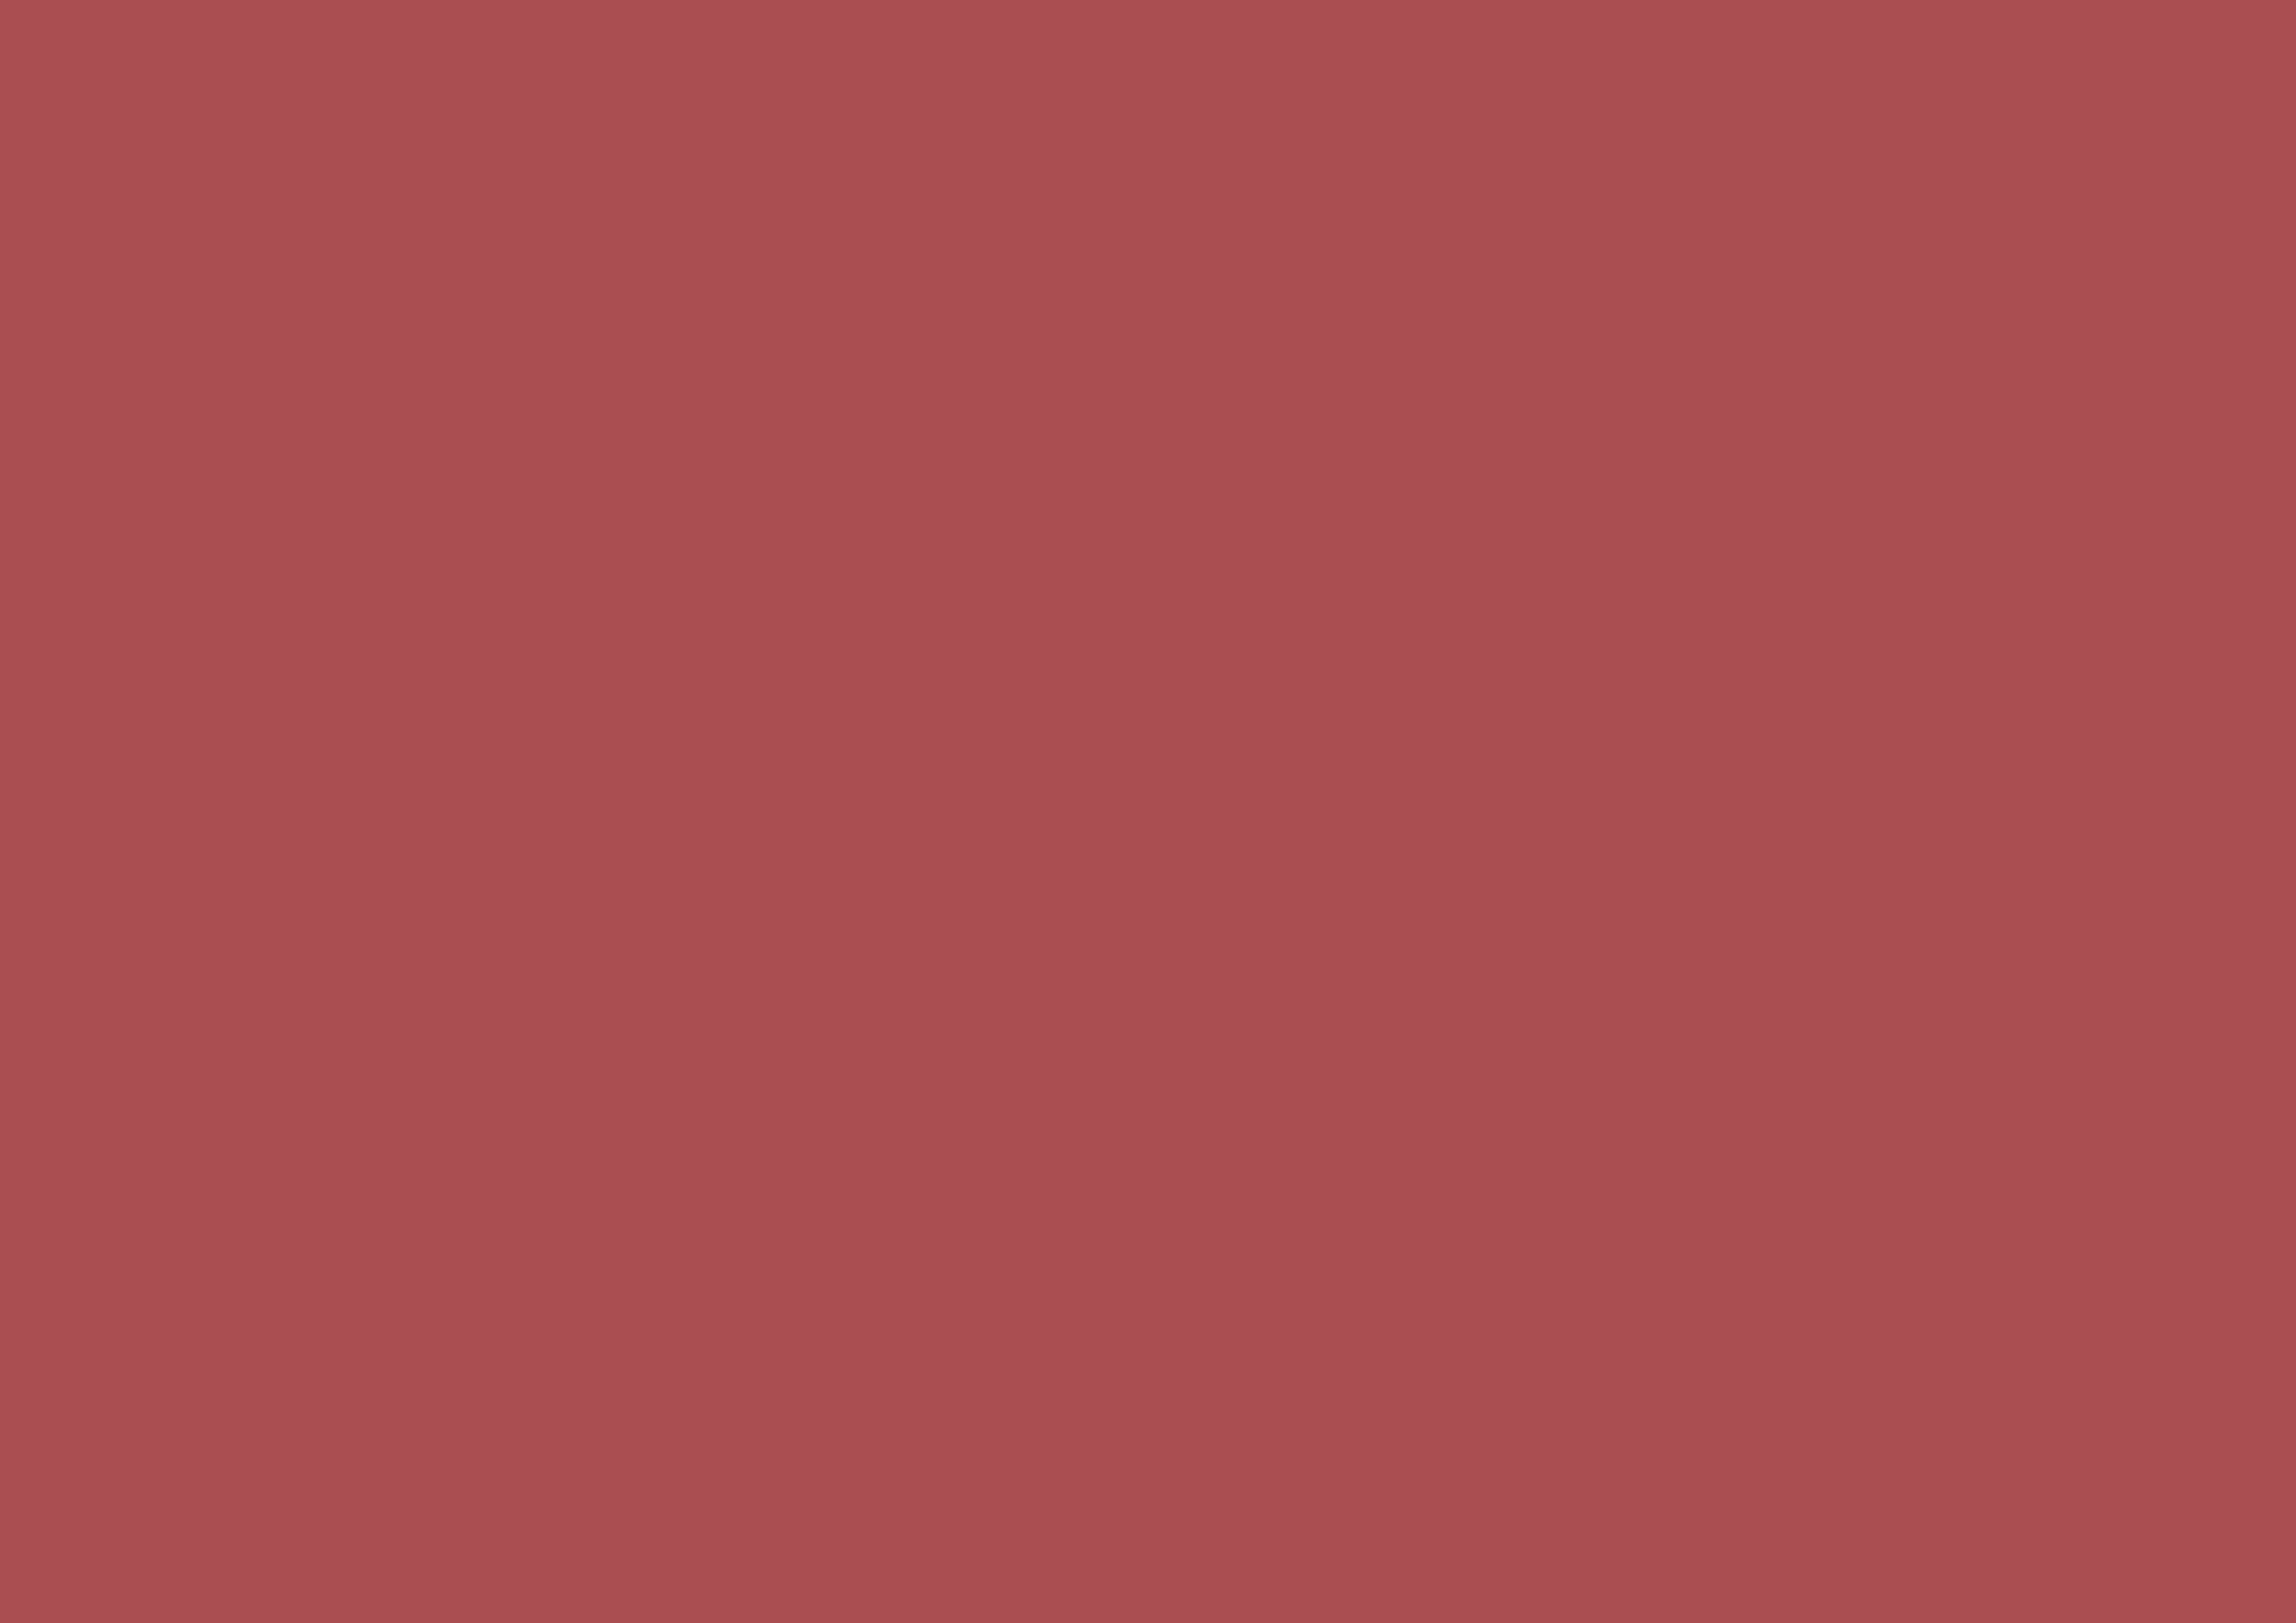 3508x2480 Rose Vale Solid Color Background